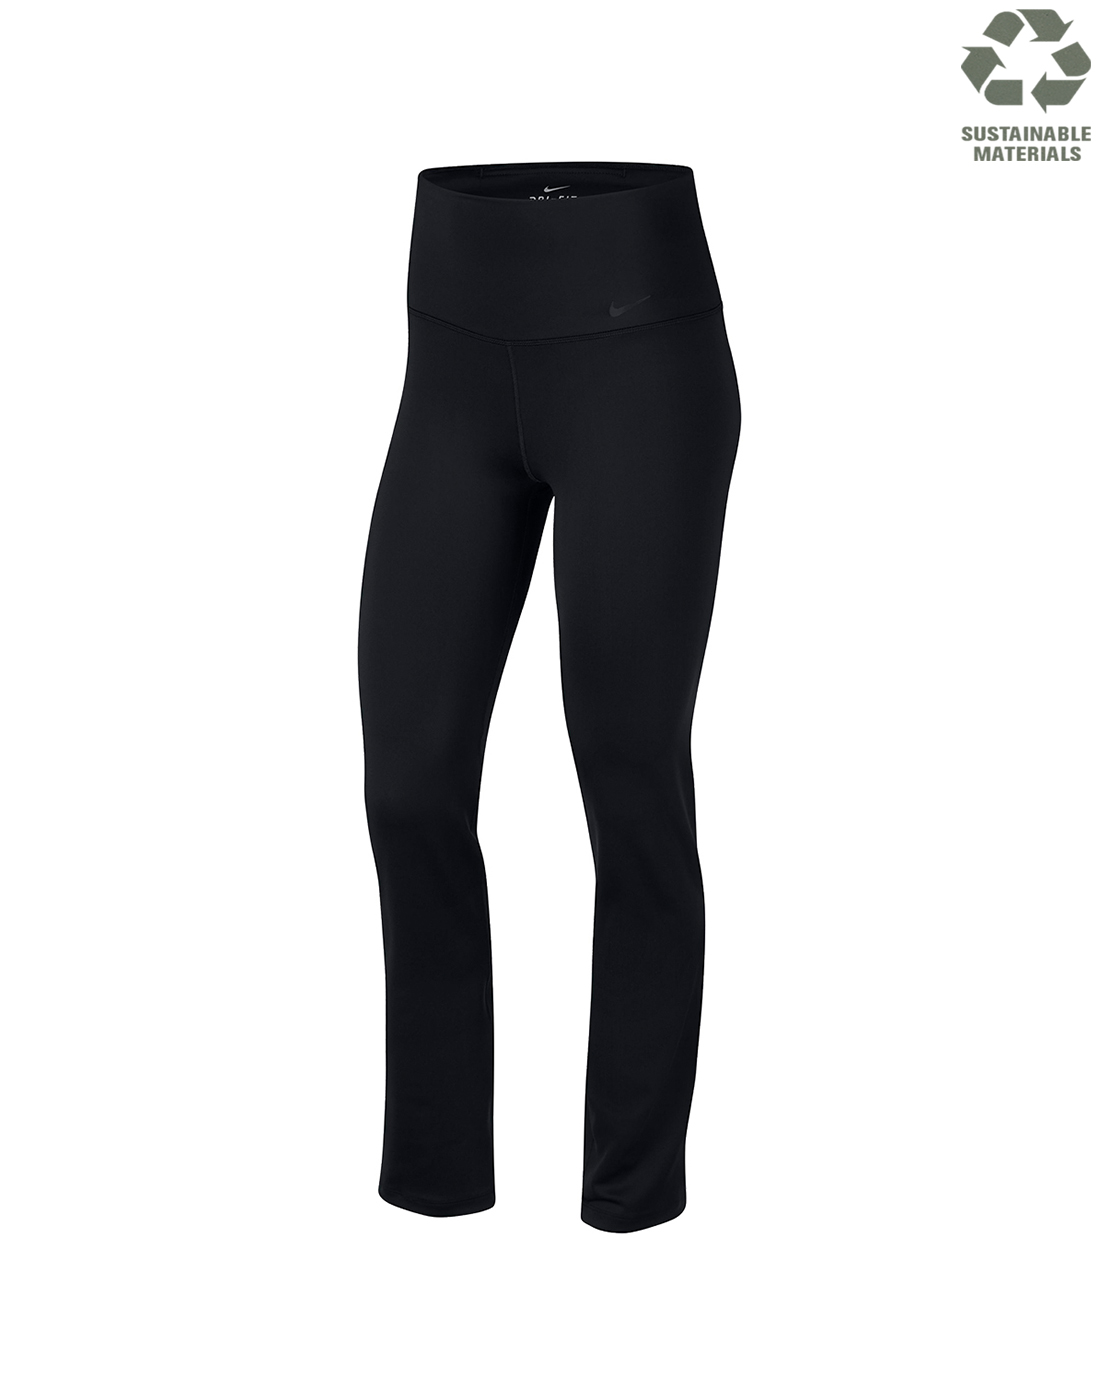 Nike Womens Classic Power Pants - Black